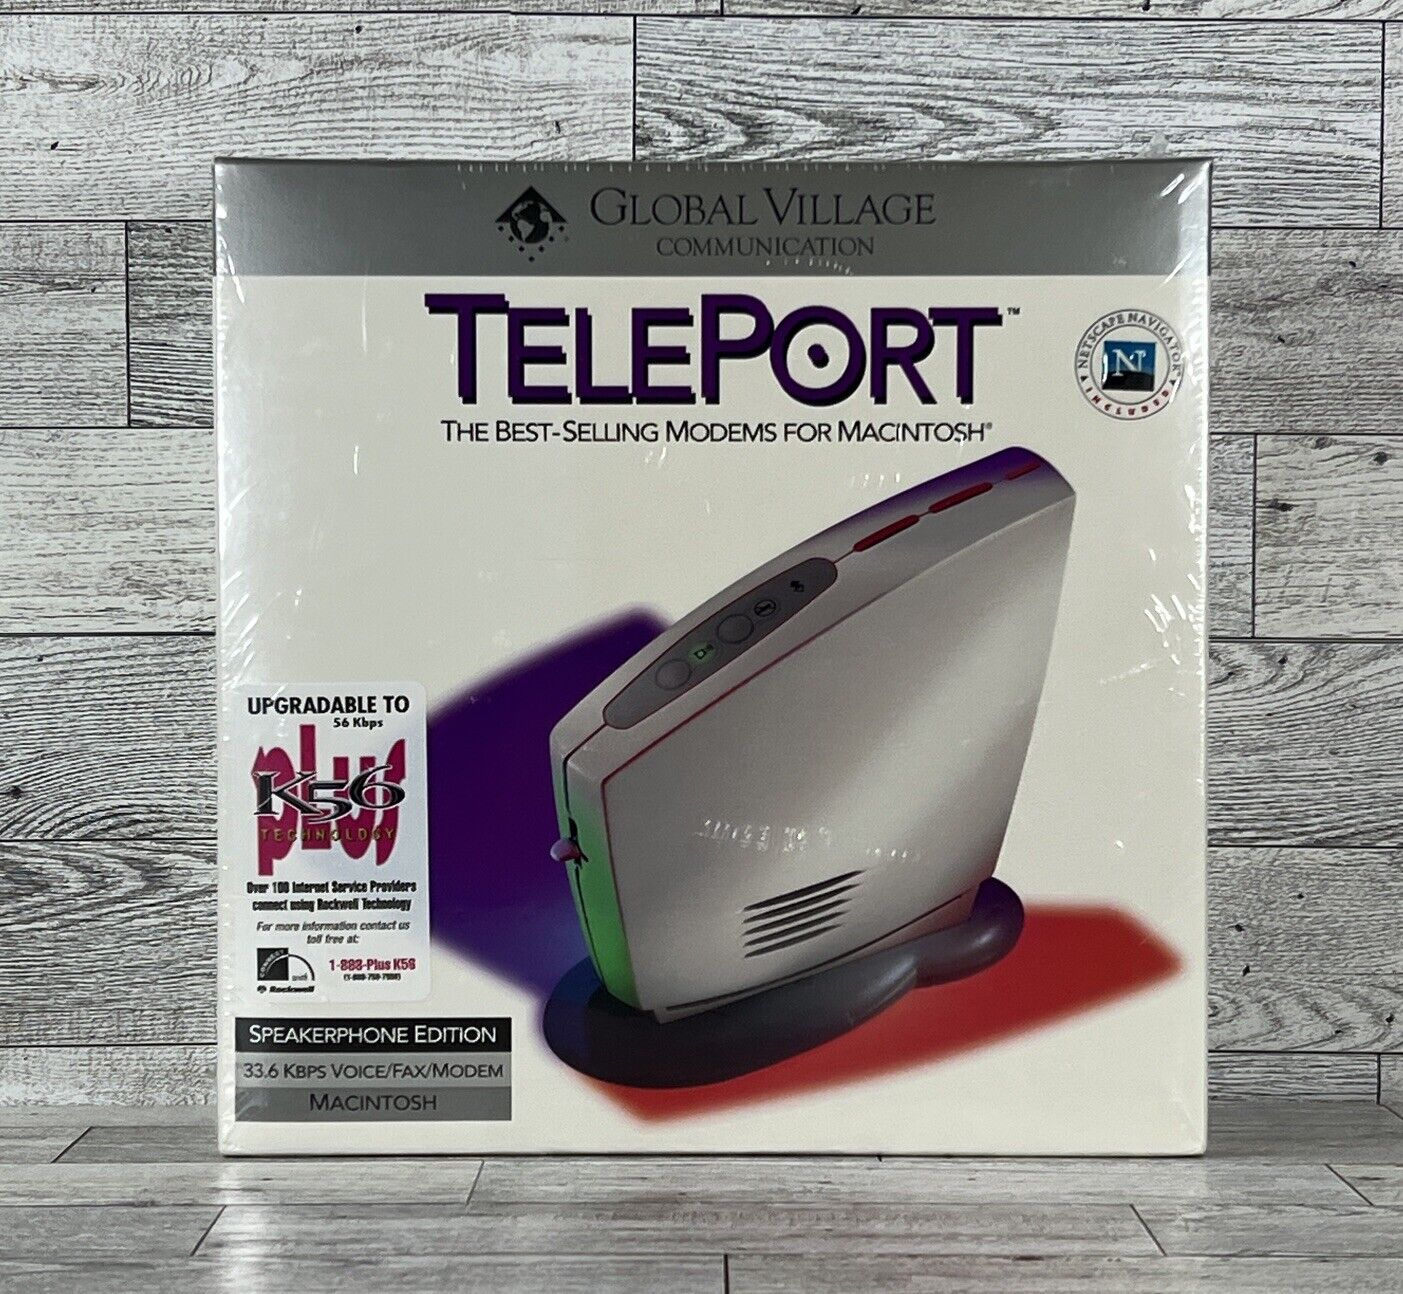 Global Village TelePort Modem For Macintosh Speakerphone Edition 33.6 KBPS NEW